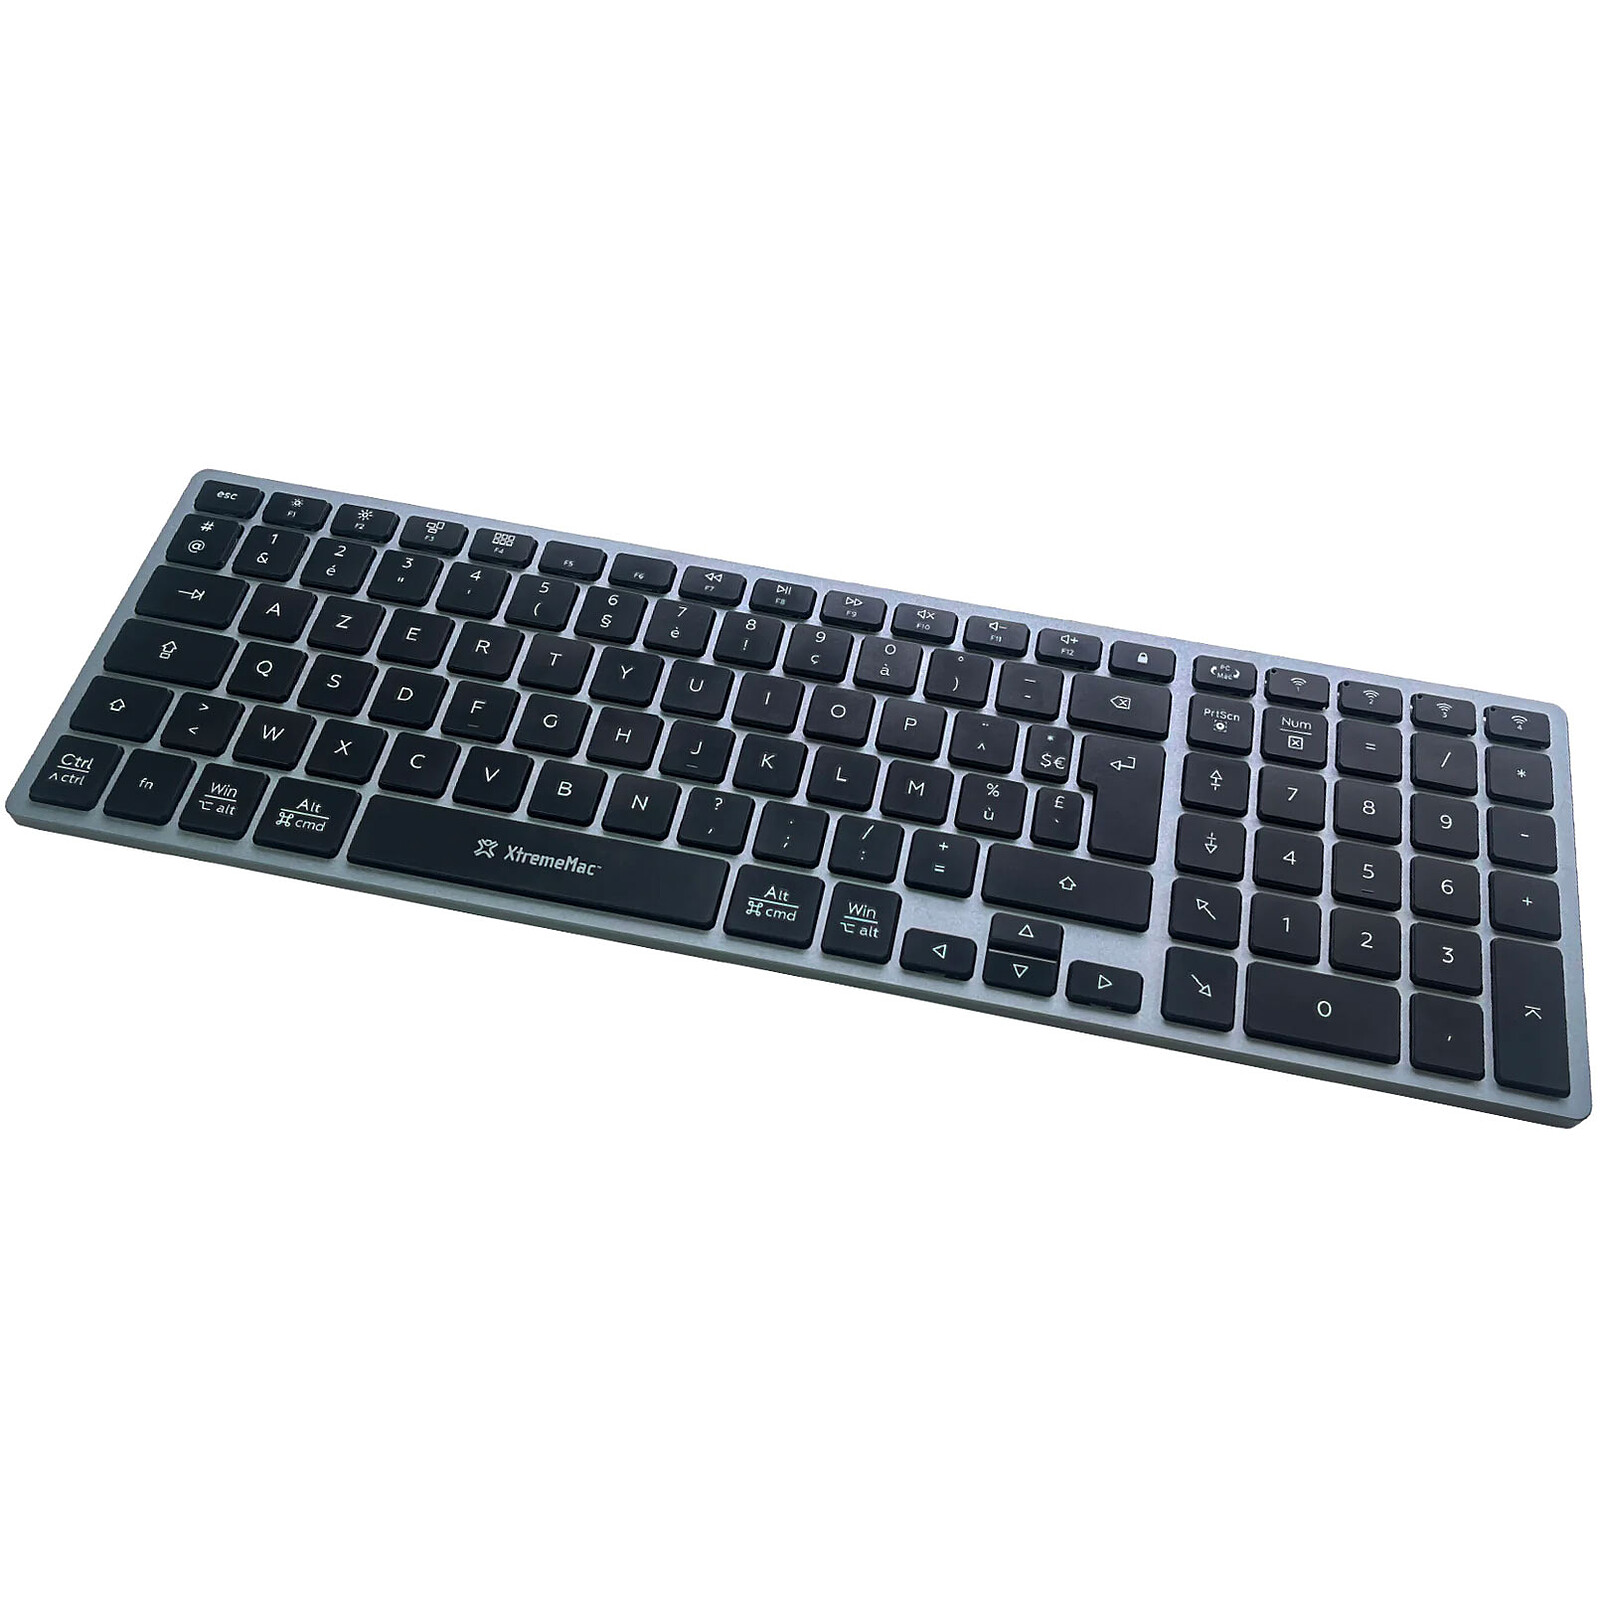  Mac Compatible Keyboard